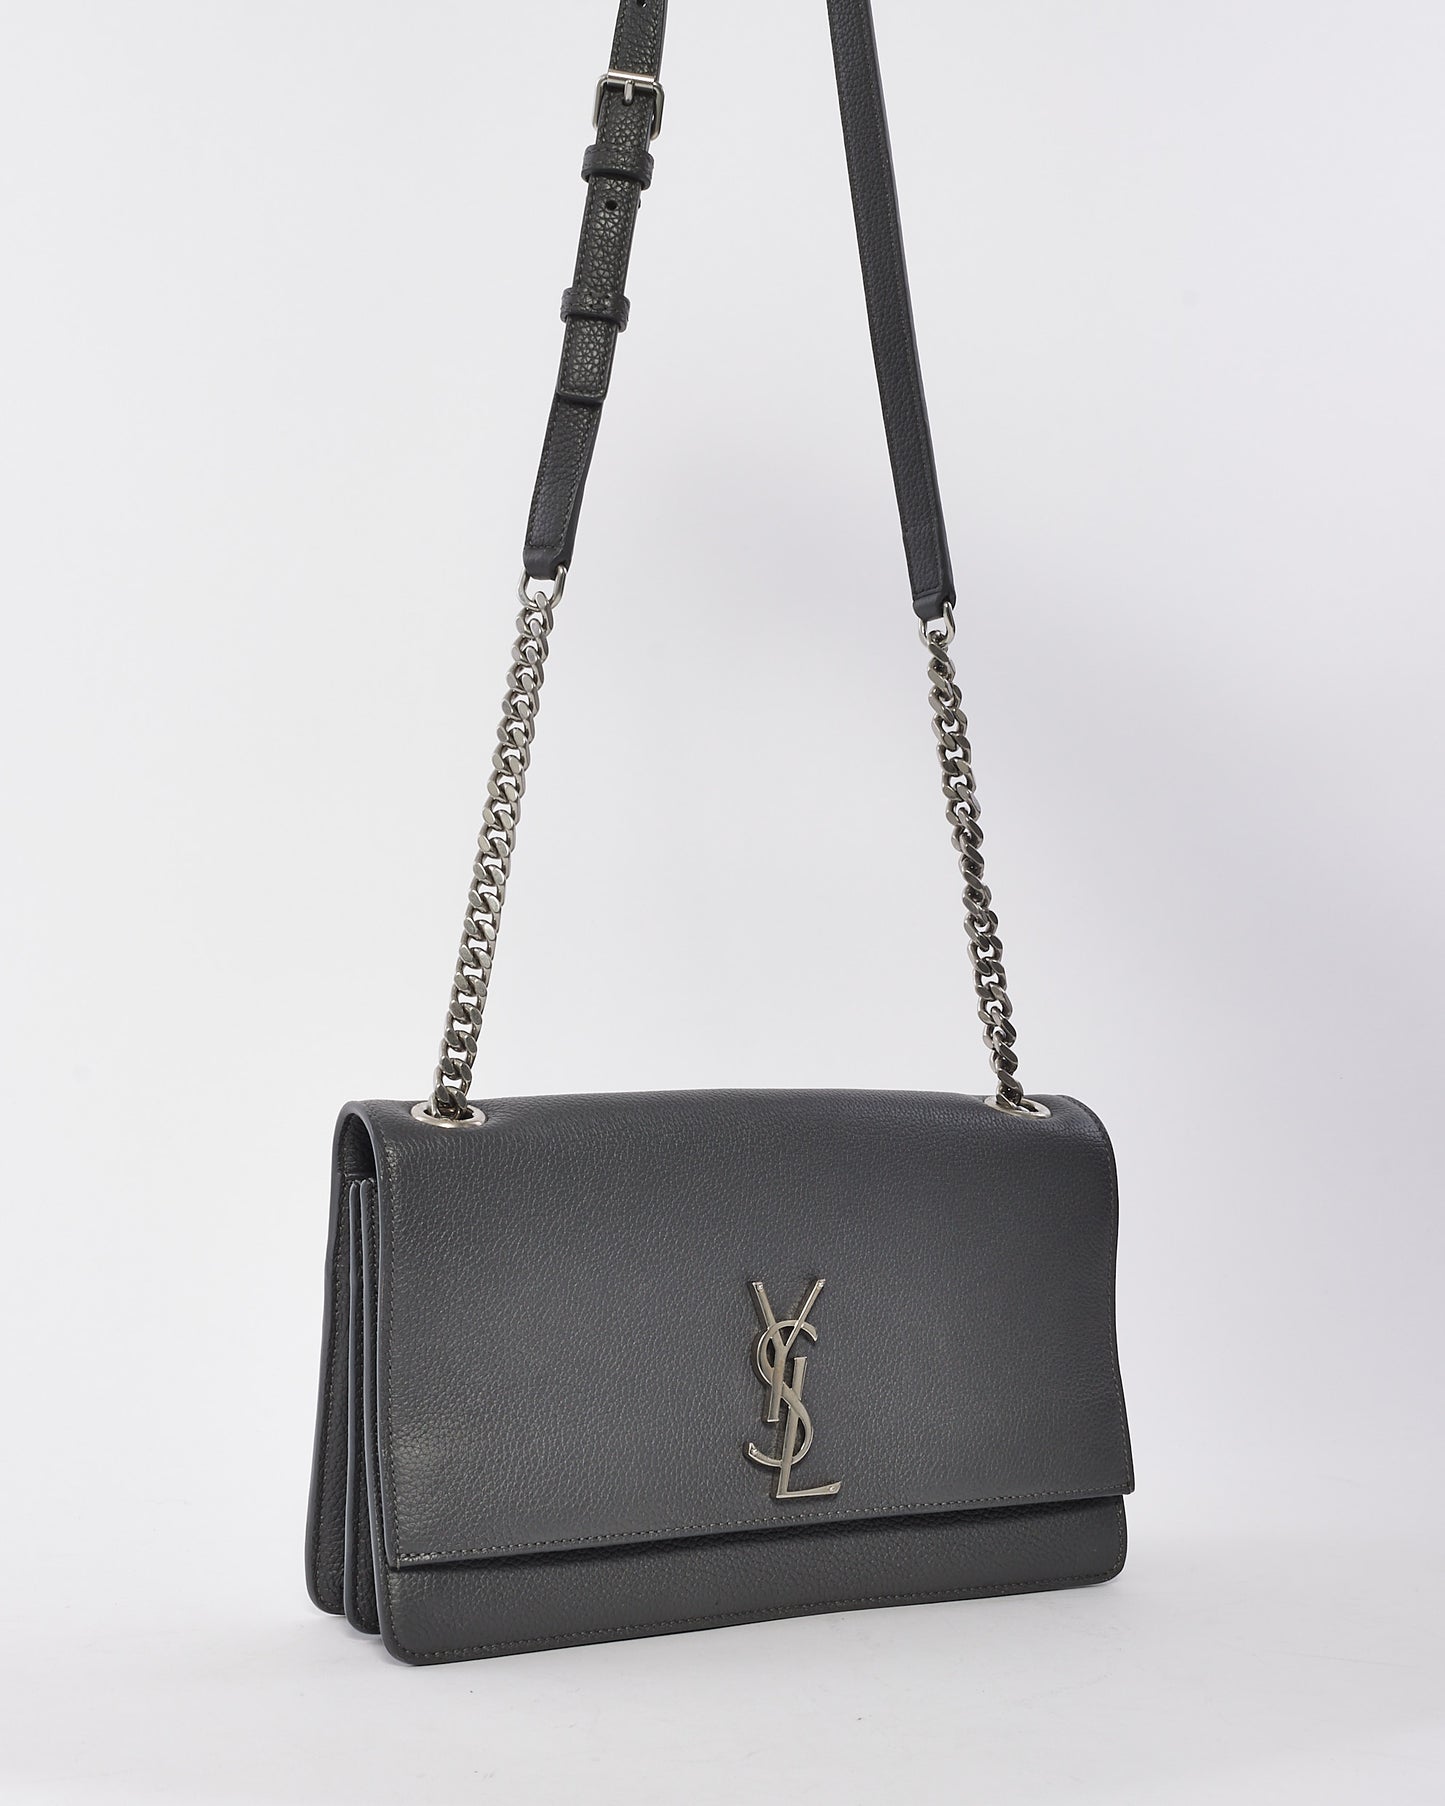 Saint Laurent Grey Leather Medium Sunset Monogram Crossbody Bag